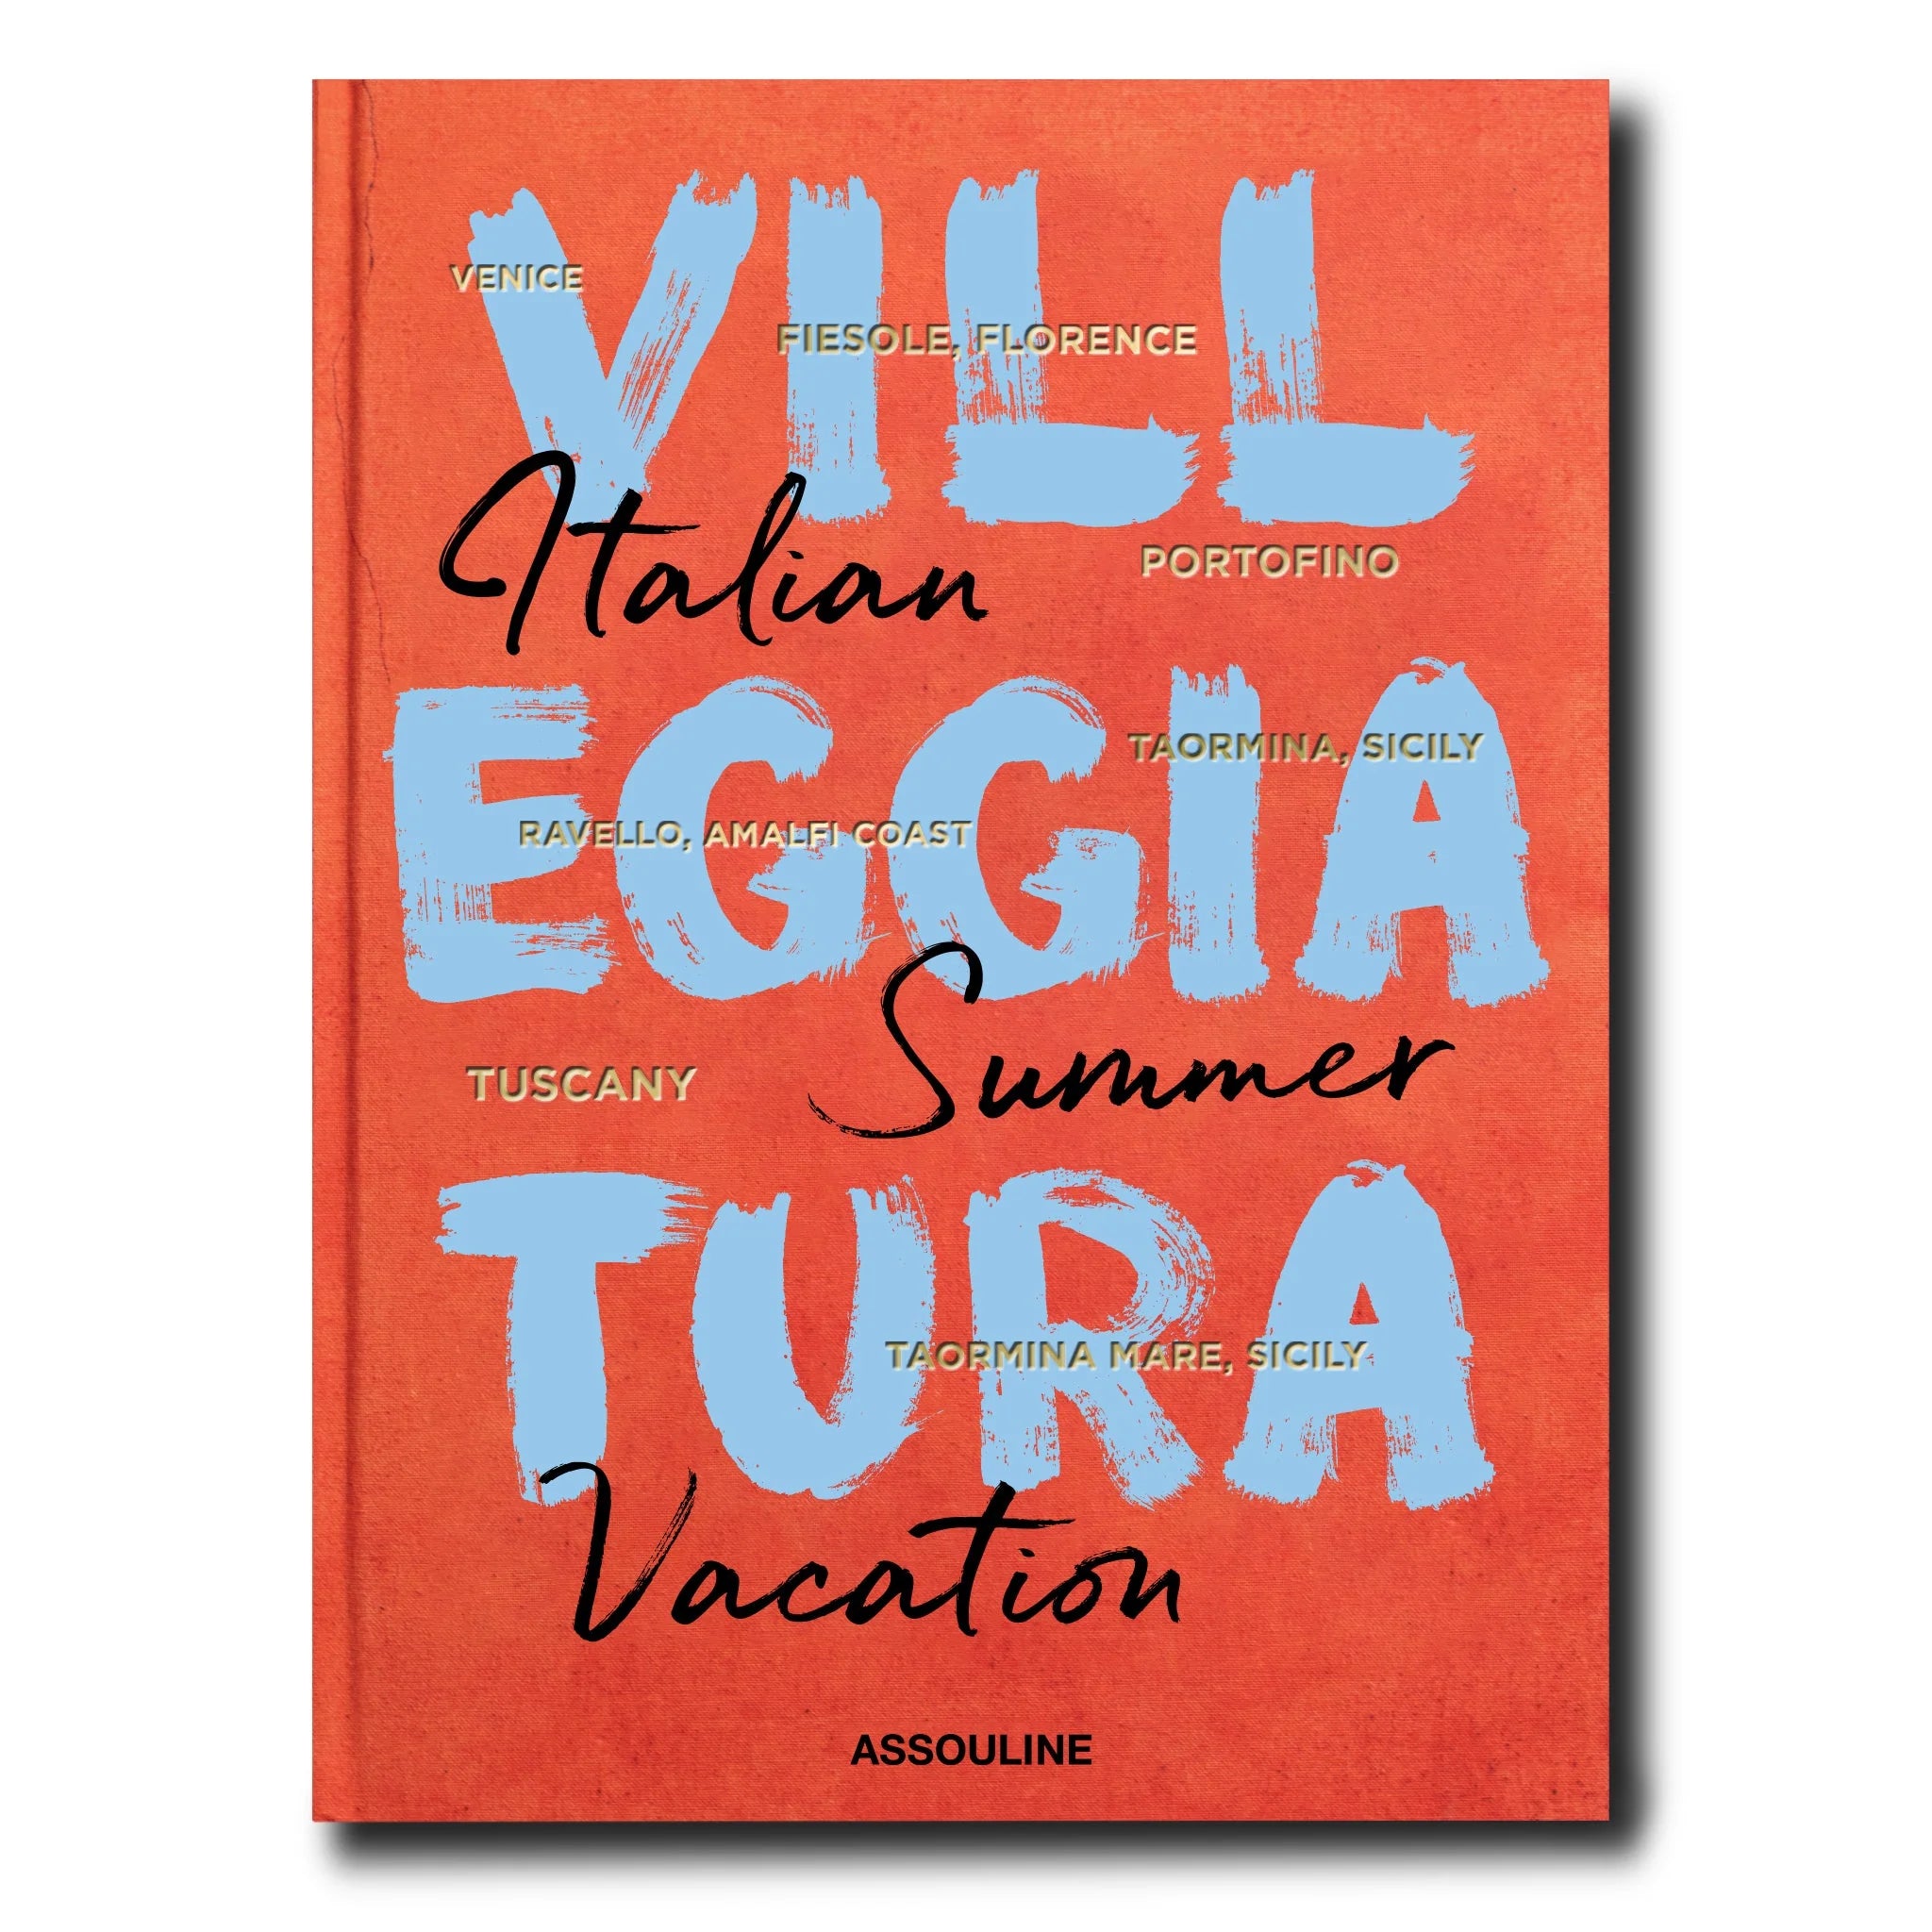 ASSOULINE Villeggiatura: Italian Summer Vacation by Cesare Cunaccia